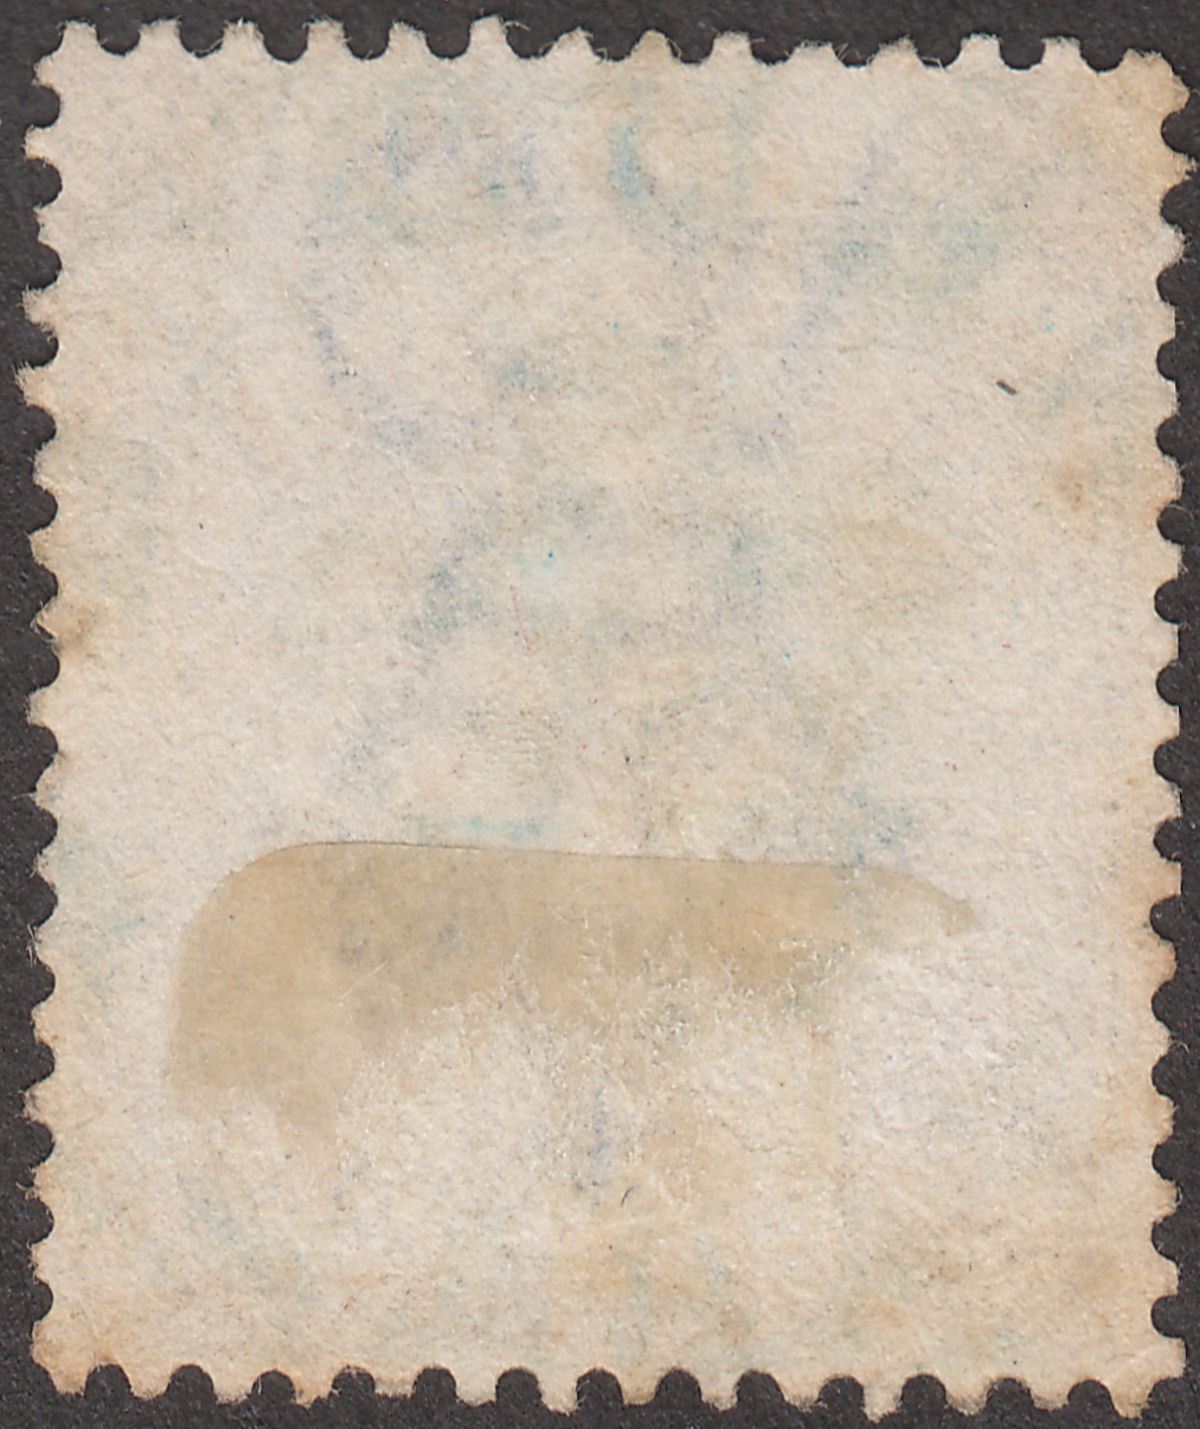 Malaya Straits Settlements 1894 QV 8c Ultramarine Used w NEBONG KABAL Postmark